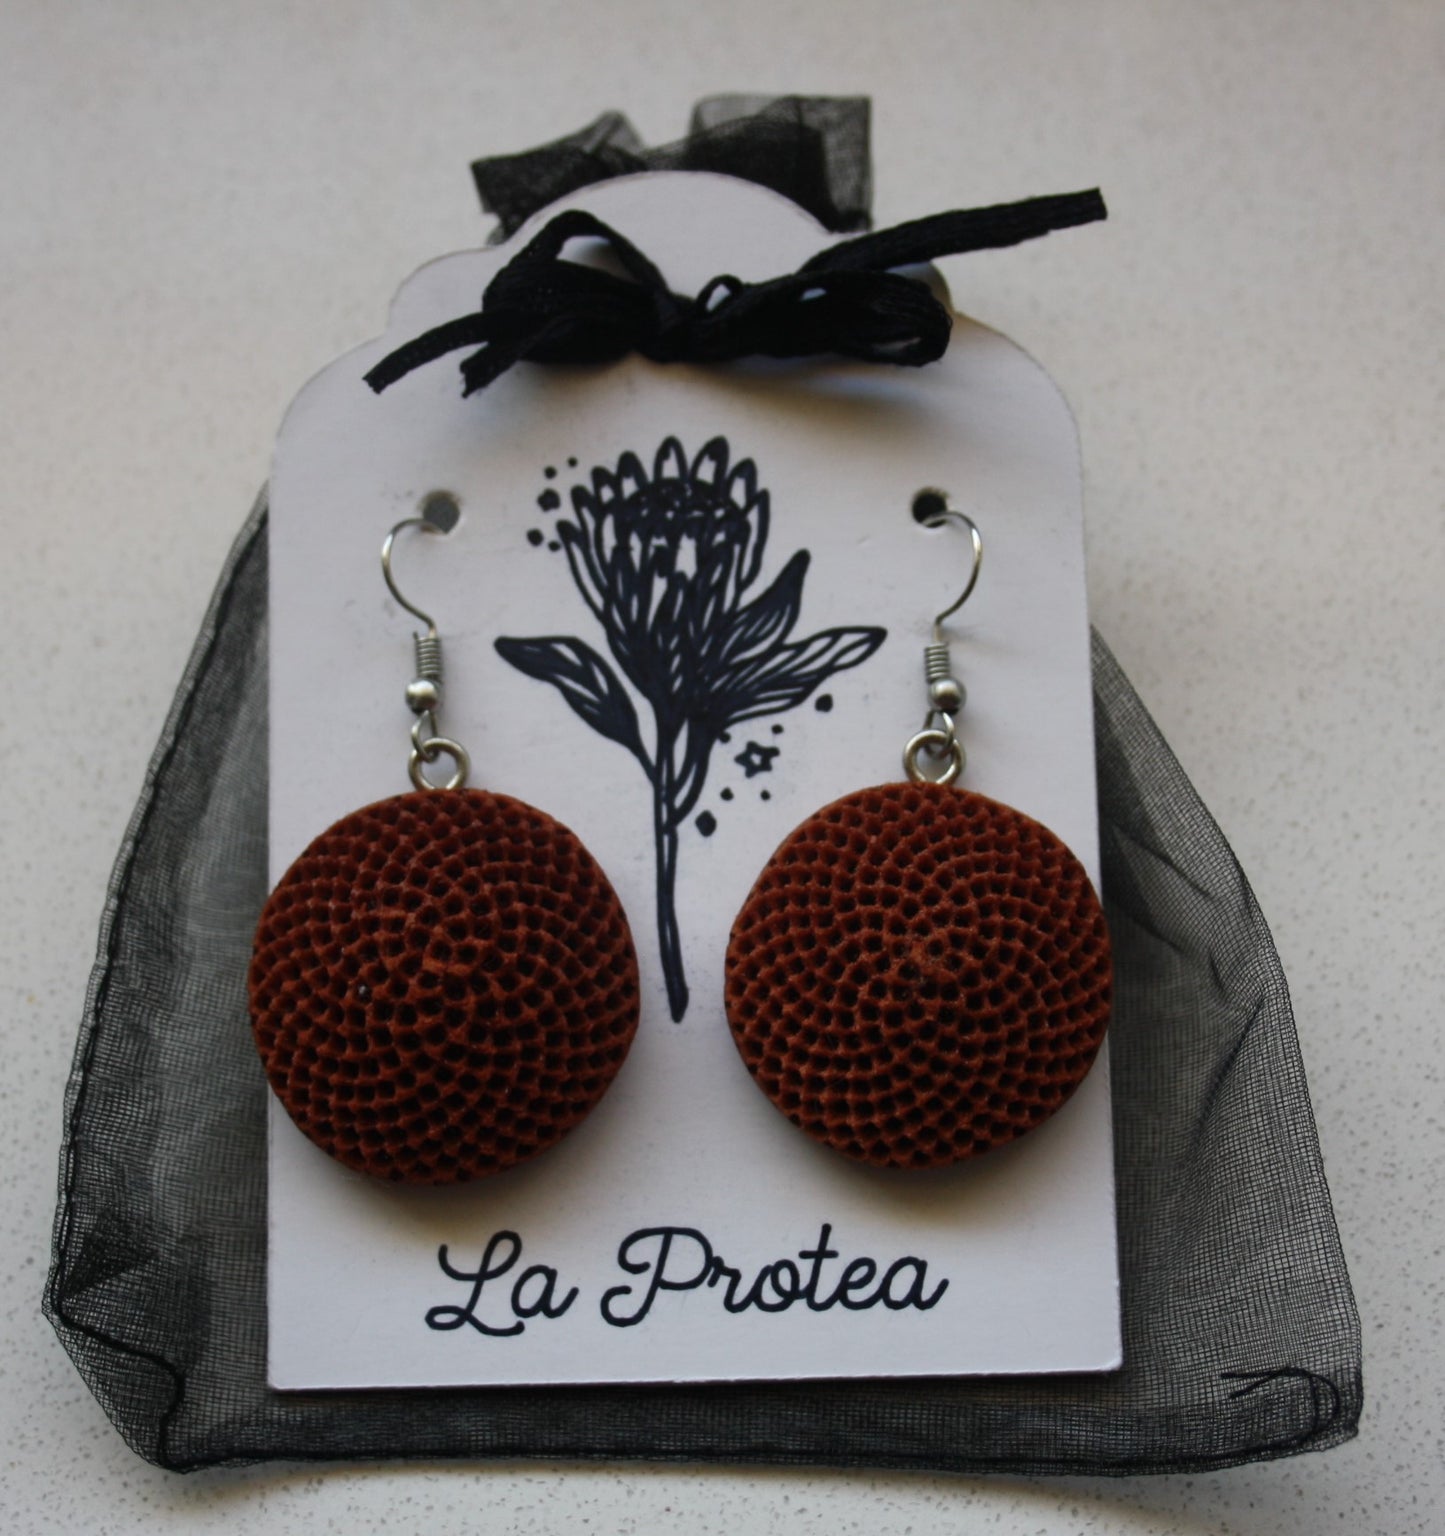 Protea seedpod earrings with chiffon bag